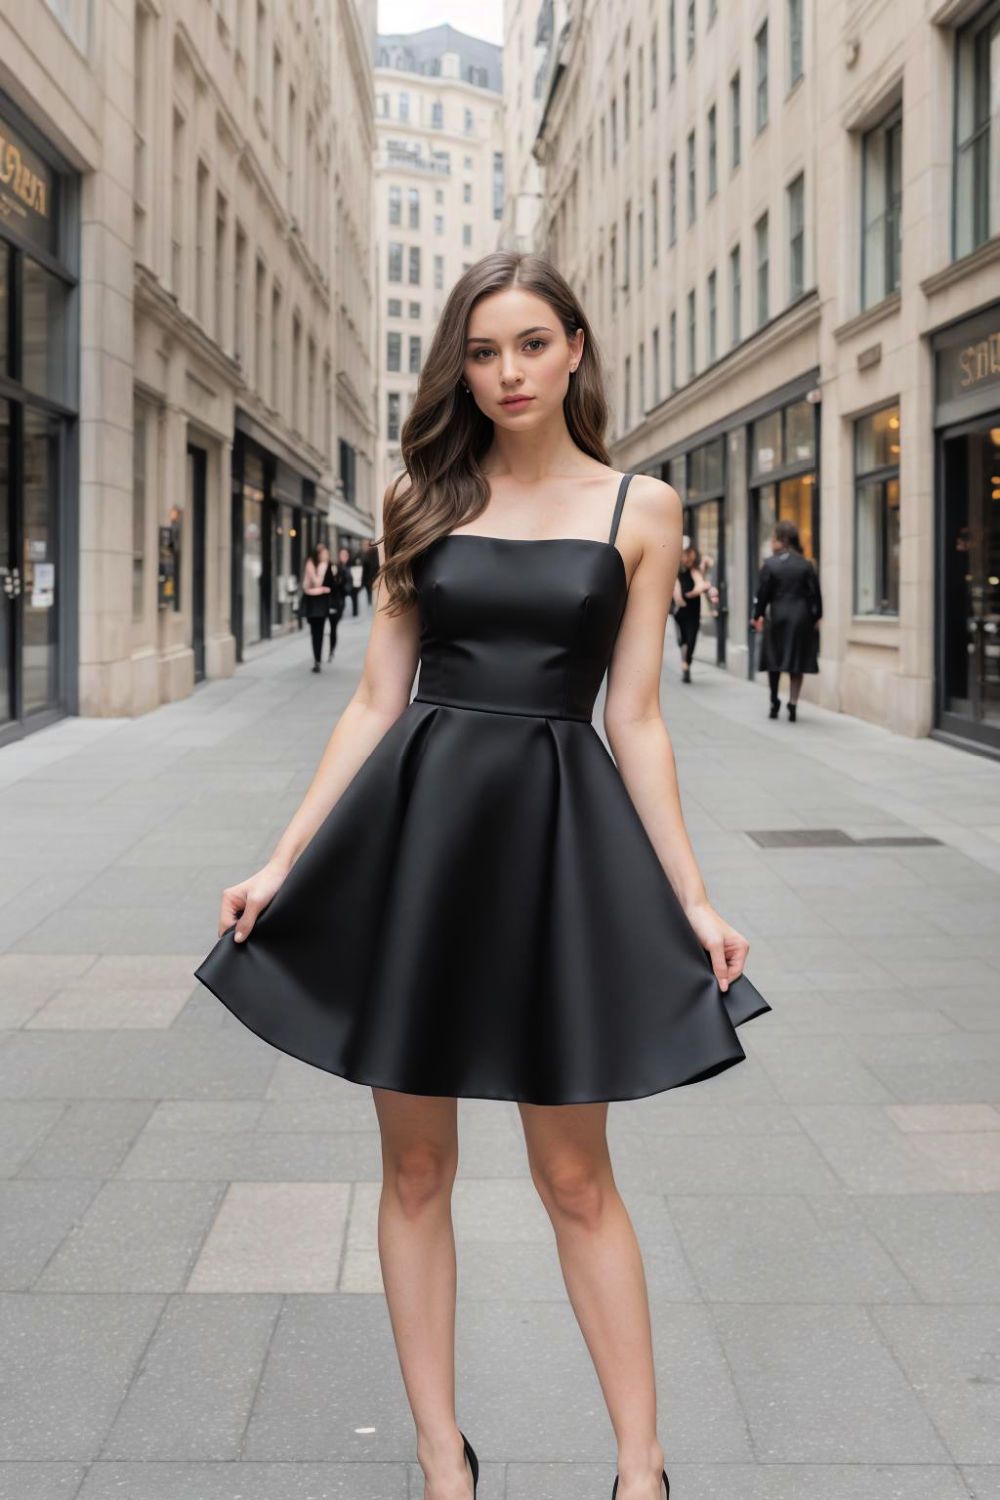 fantastic classic little black dress